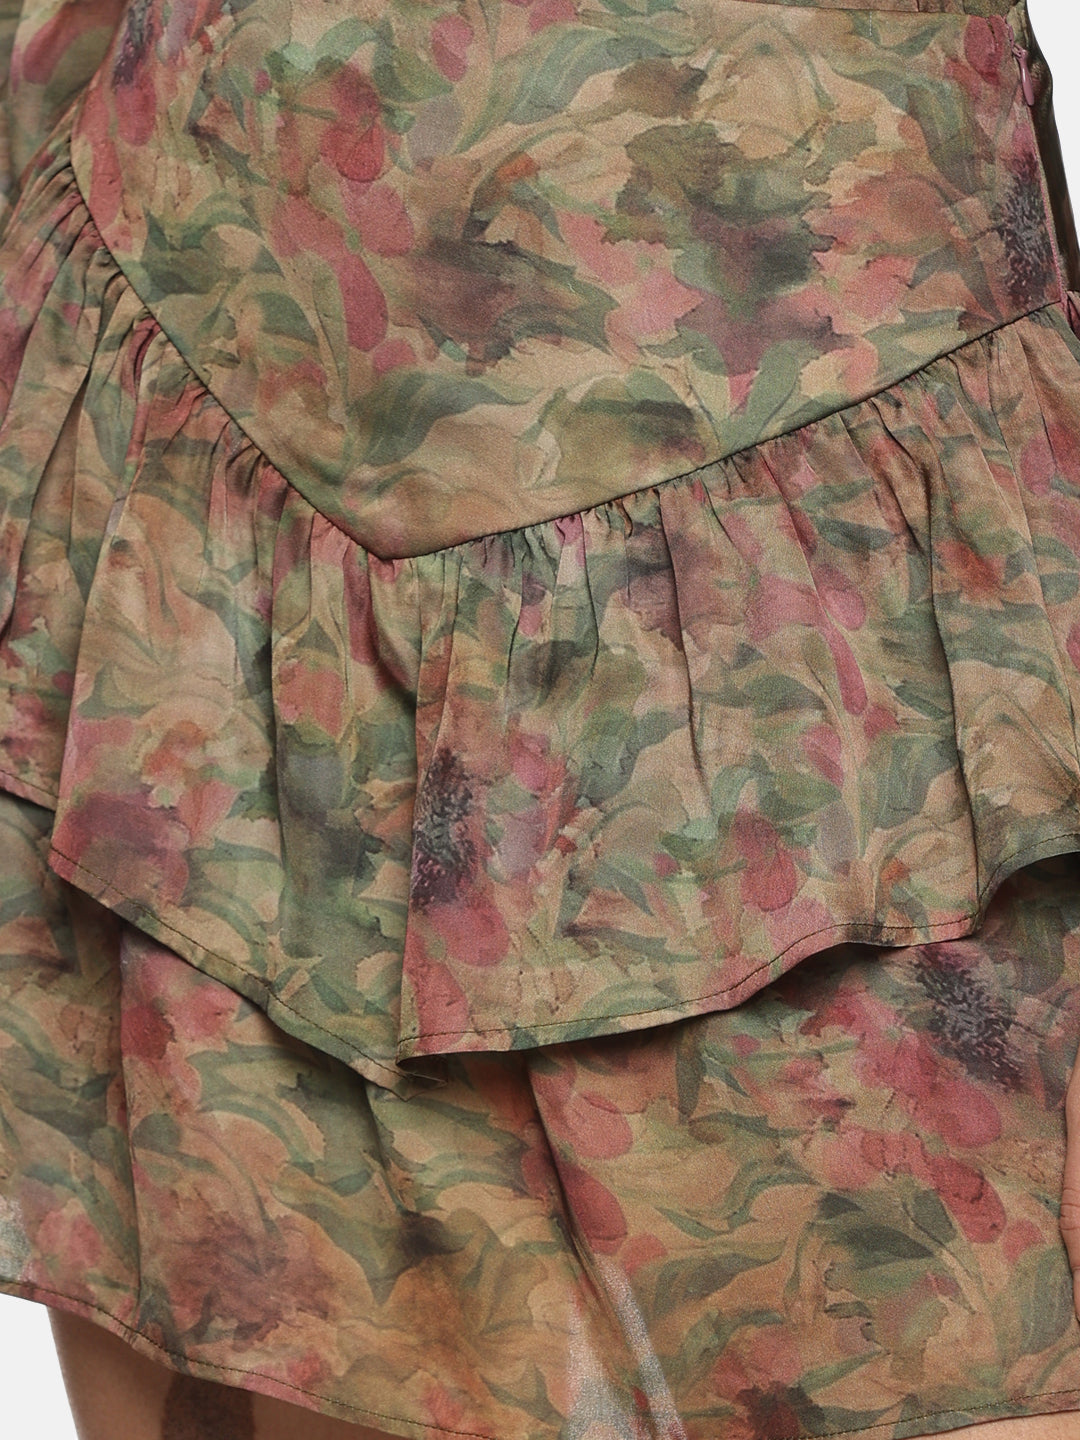 IS.U Floral Brown Ruffle Mini Skirt